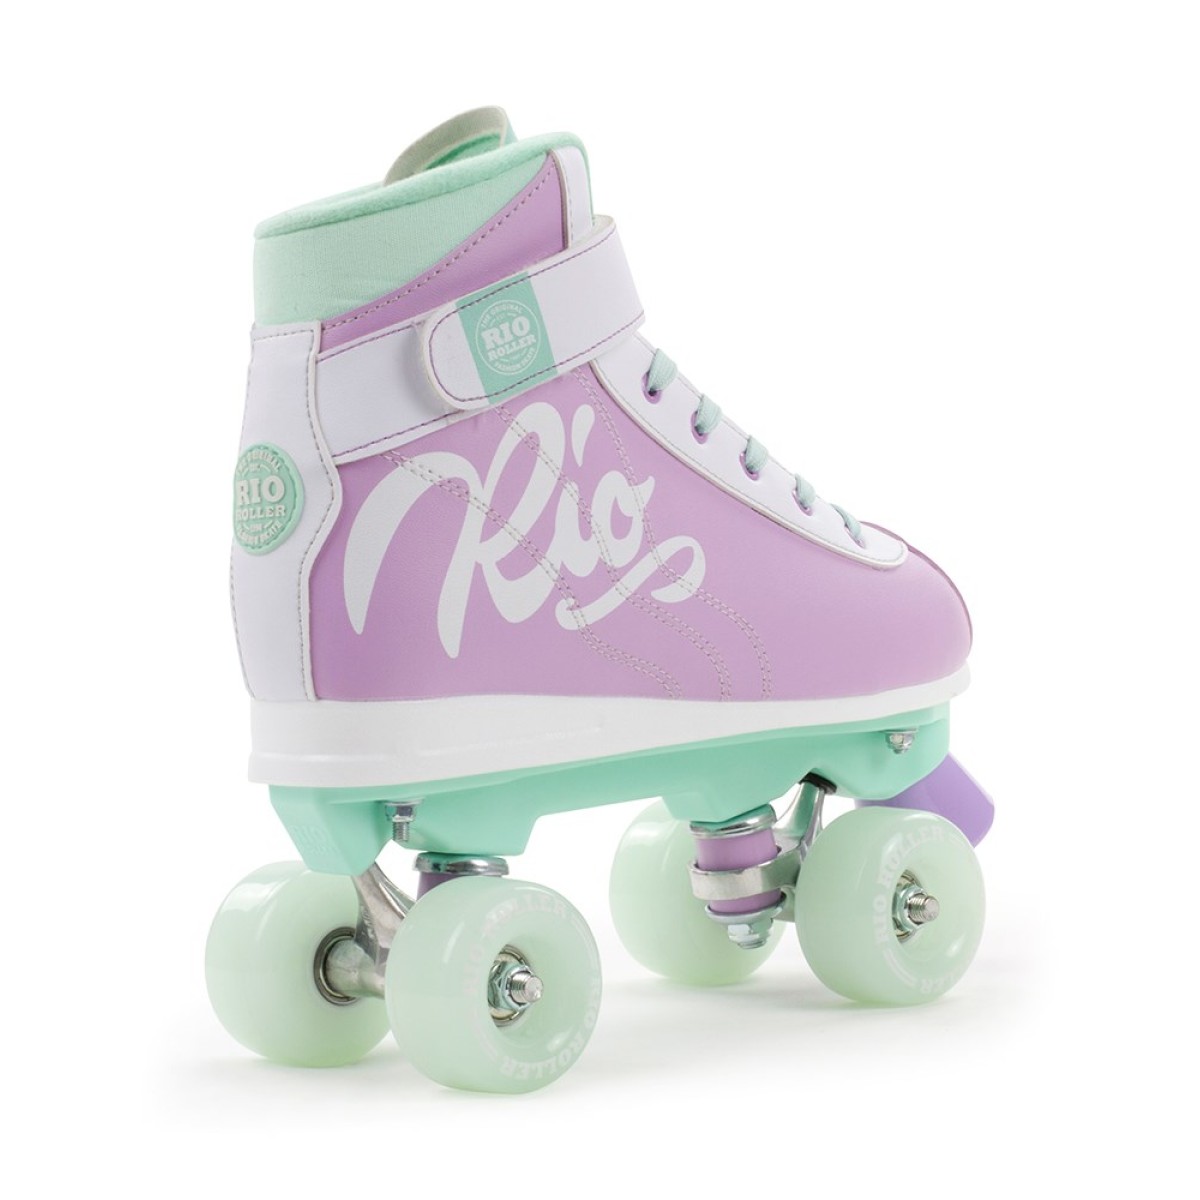 Quad skates Rio Roller Milkshake  RIO ROLLER - view 2